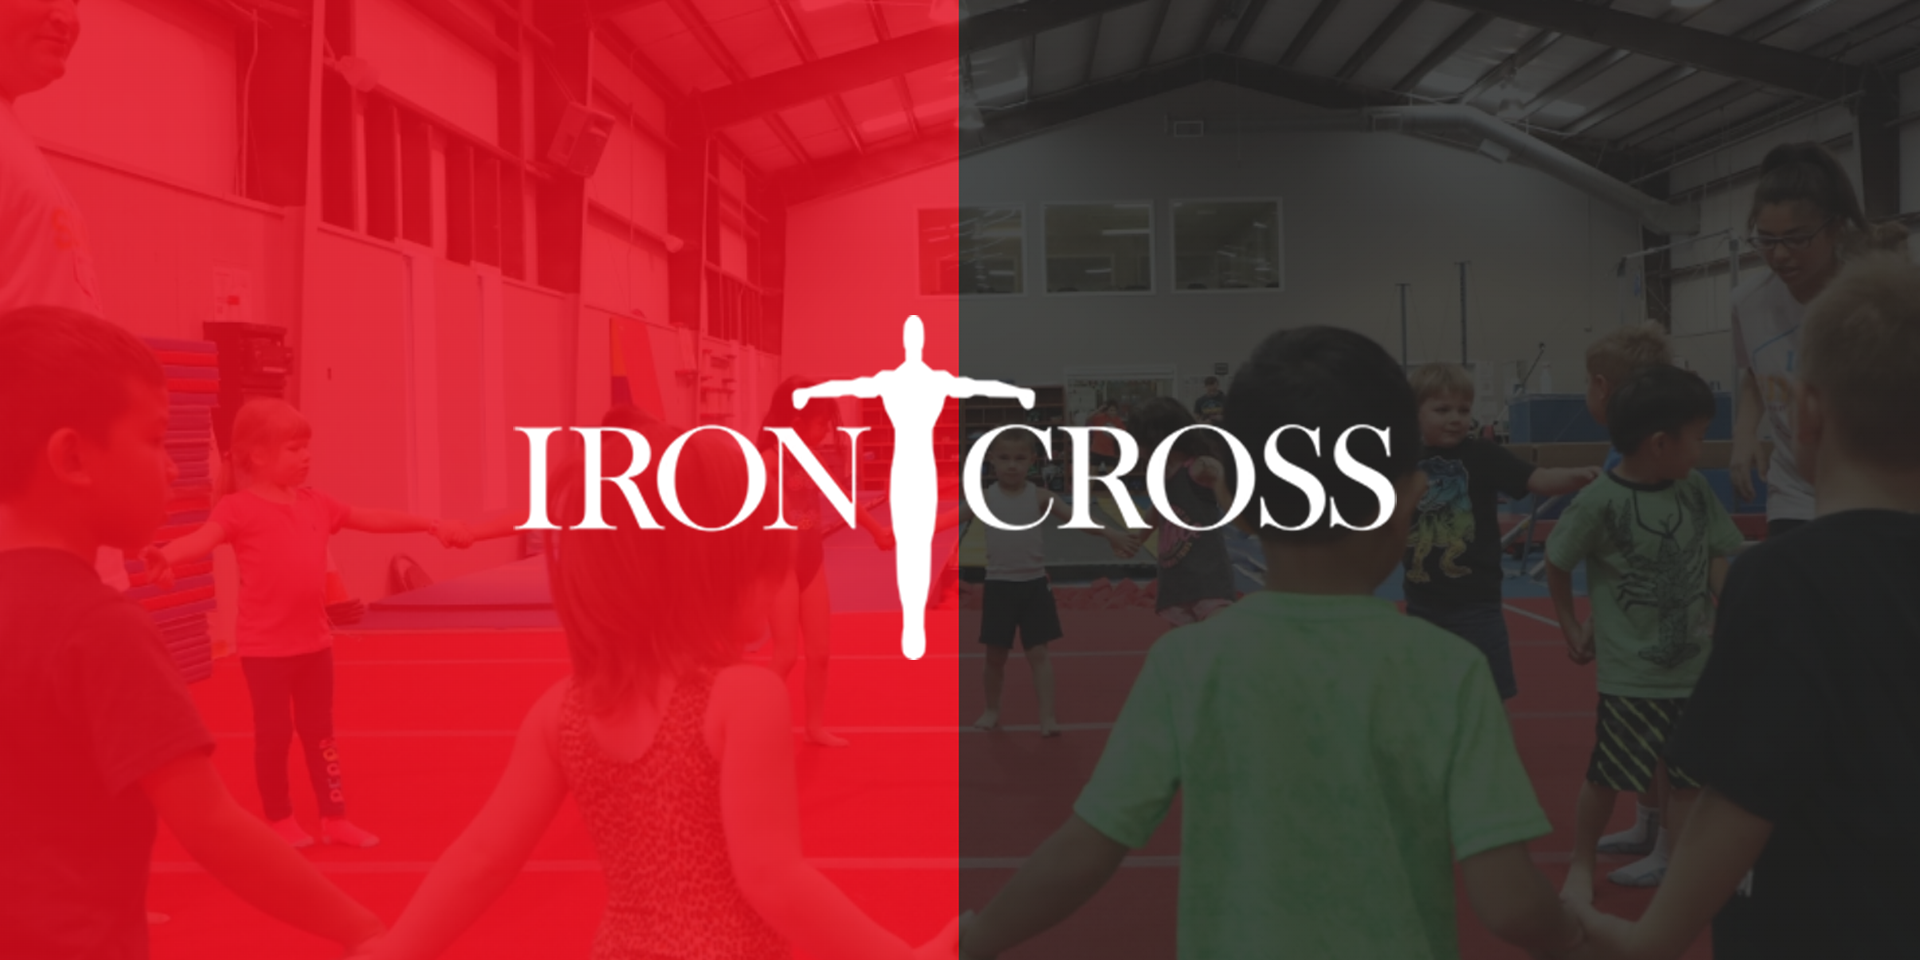 Iron Cross Gymnastics